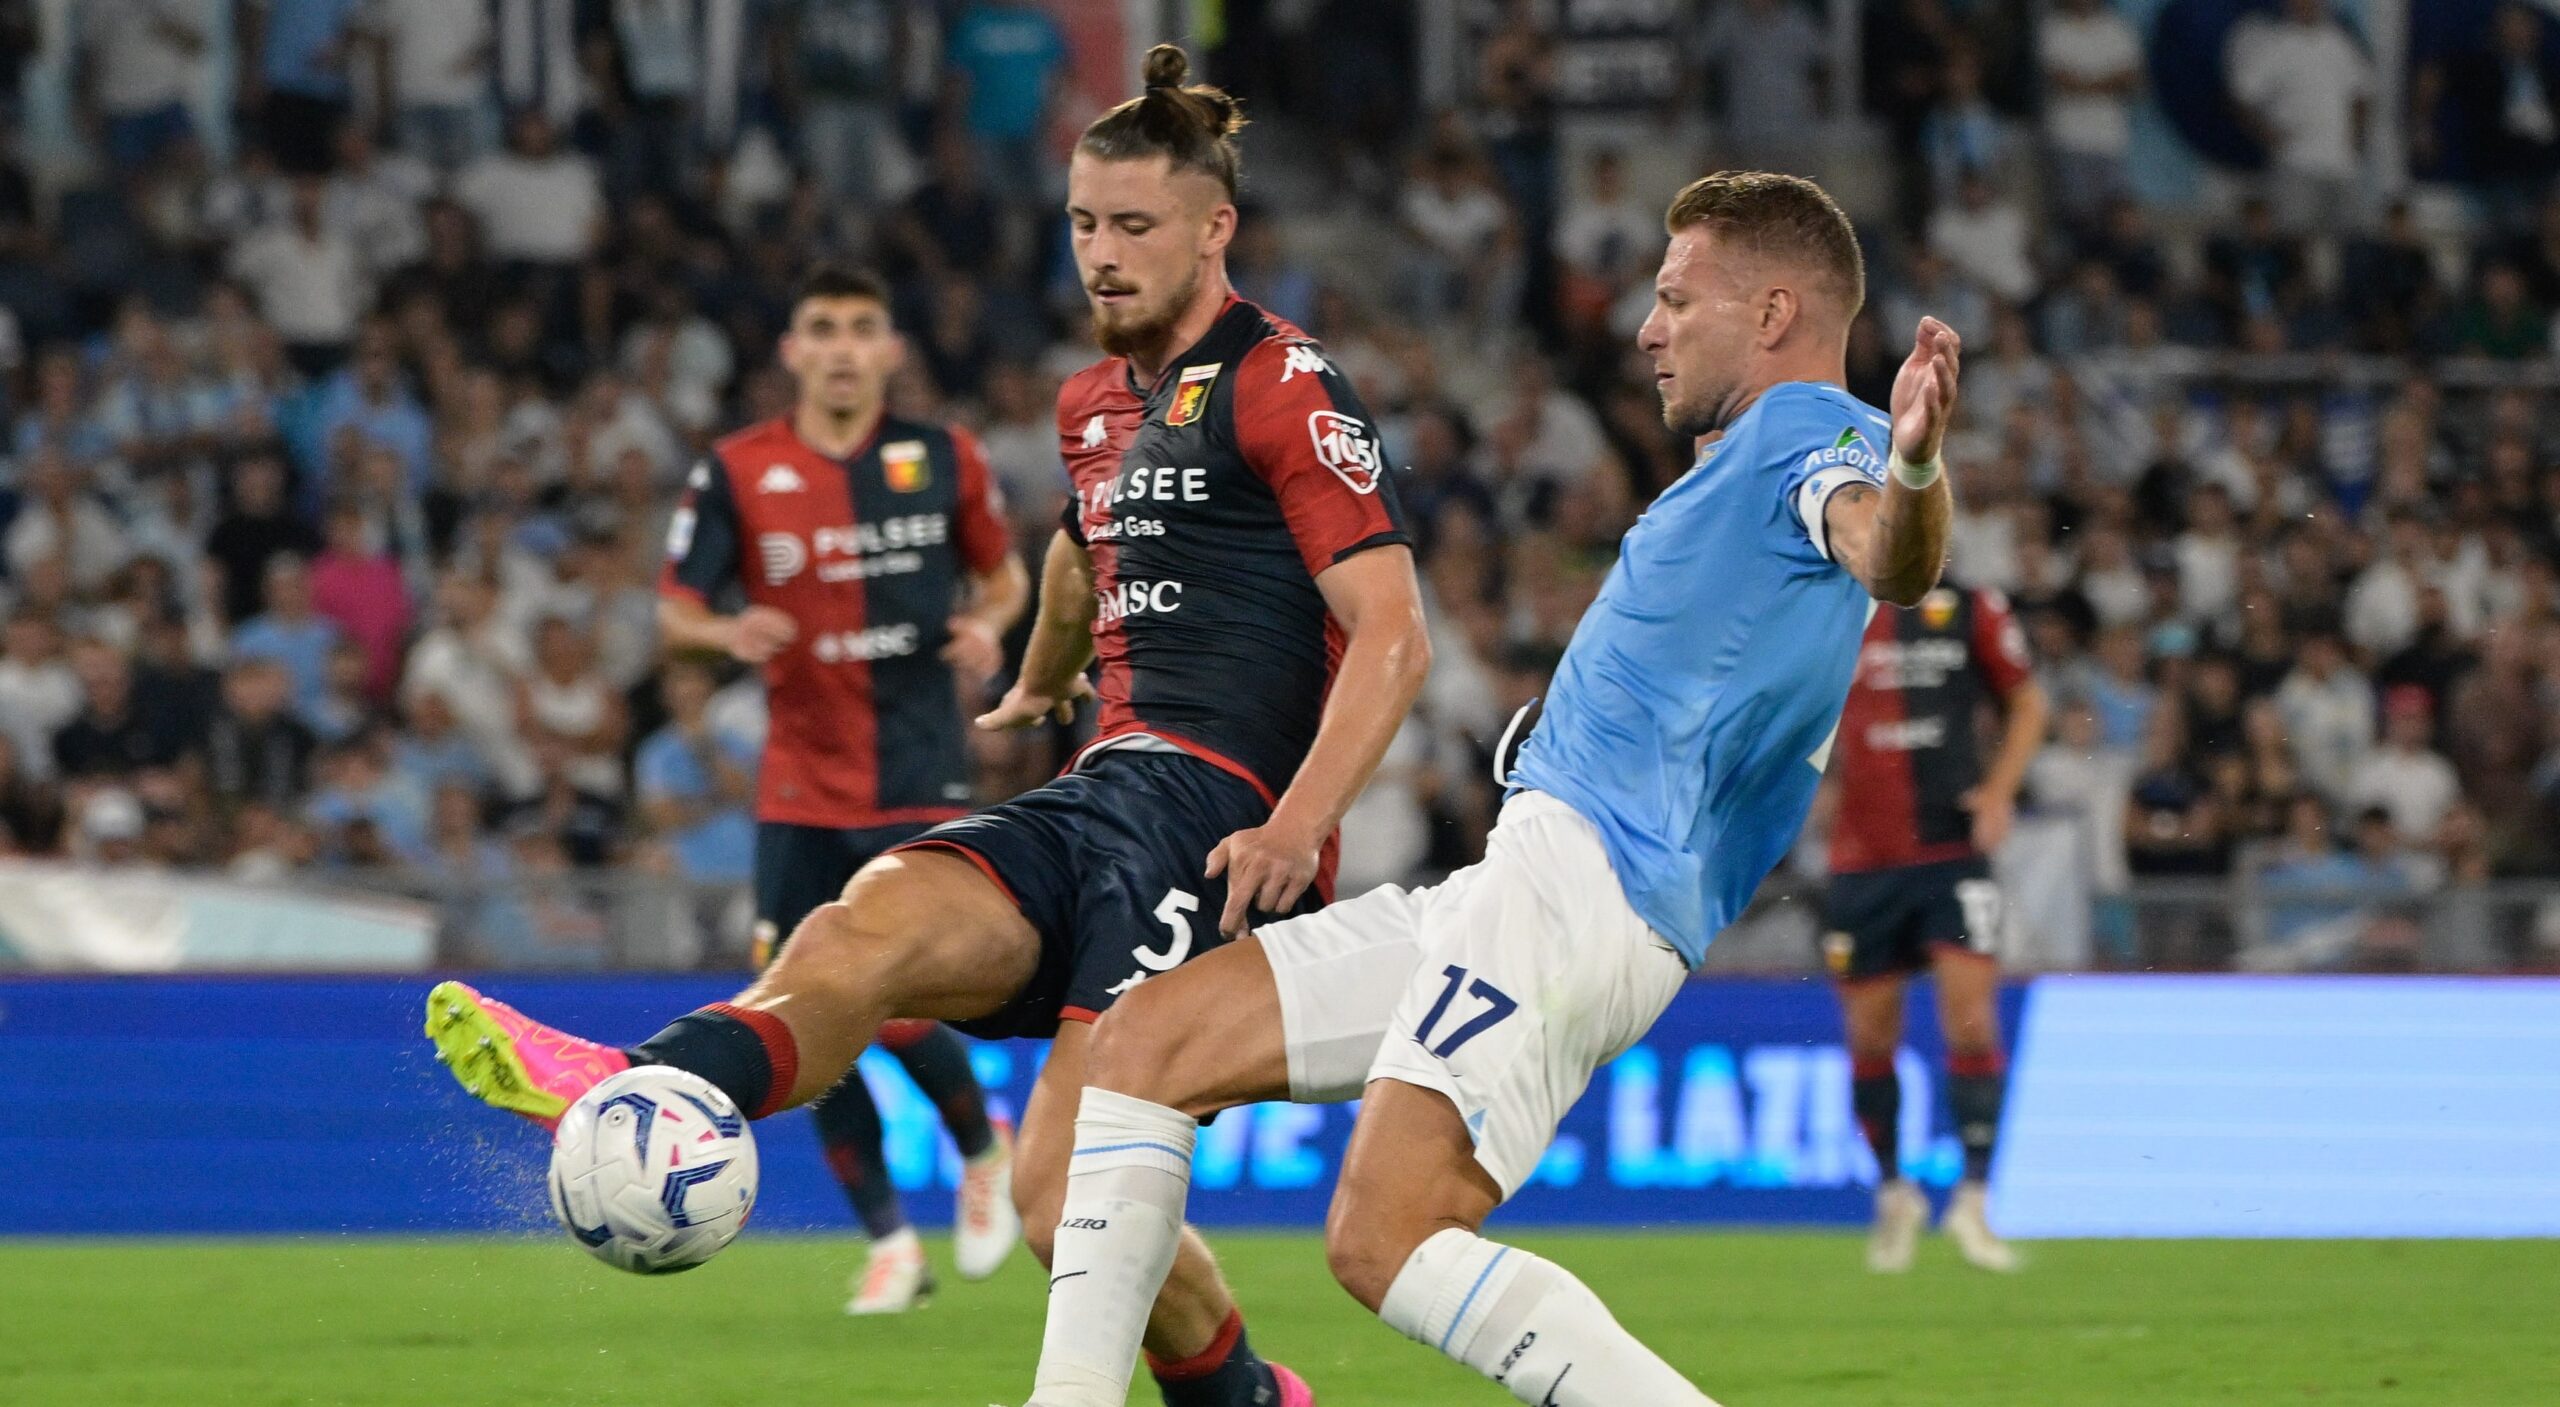 Presa din Italia l-a lăudat pe Radu Drăgușin, după Lazio – Genoa 0-1. Gazzetta dello Sport: ”Joc de gladiator”